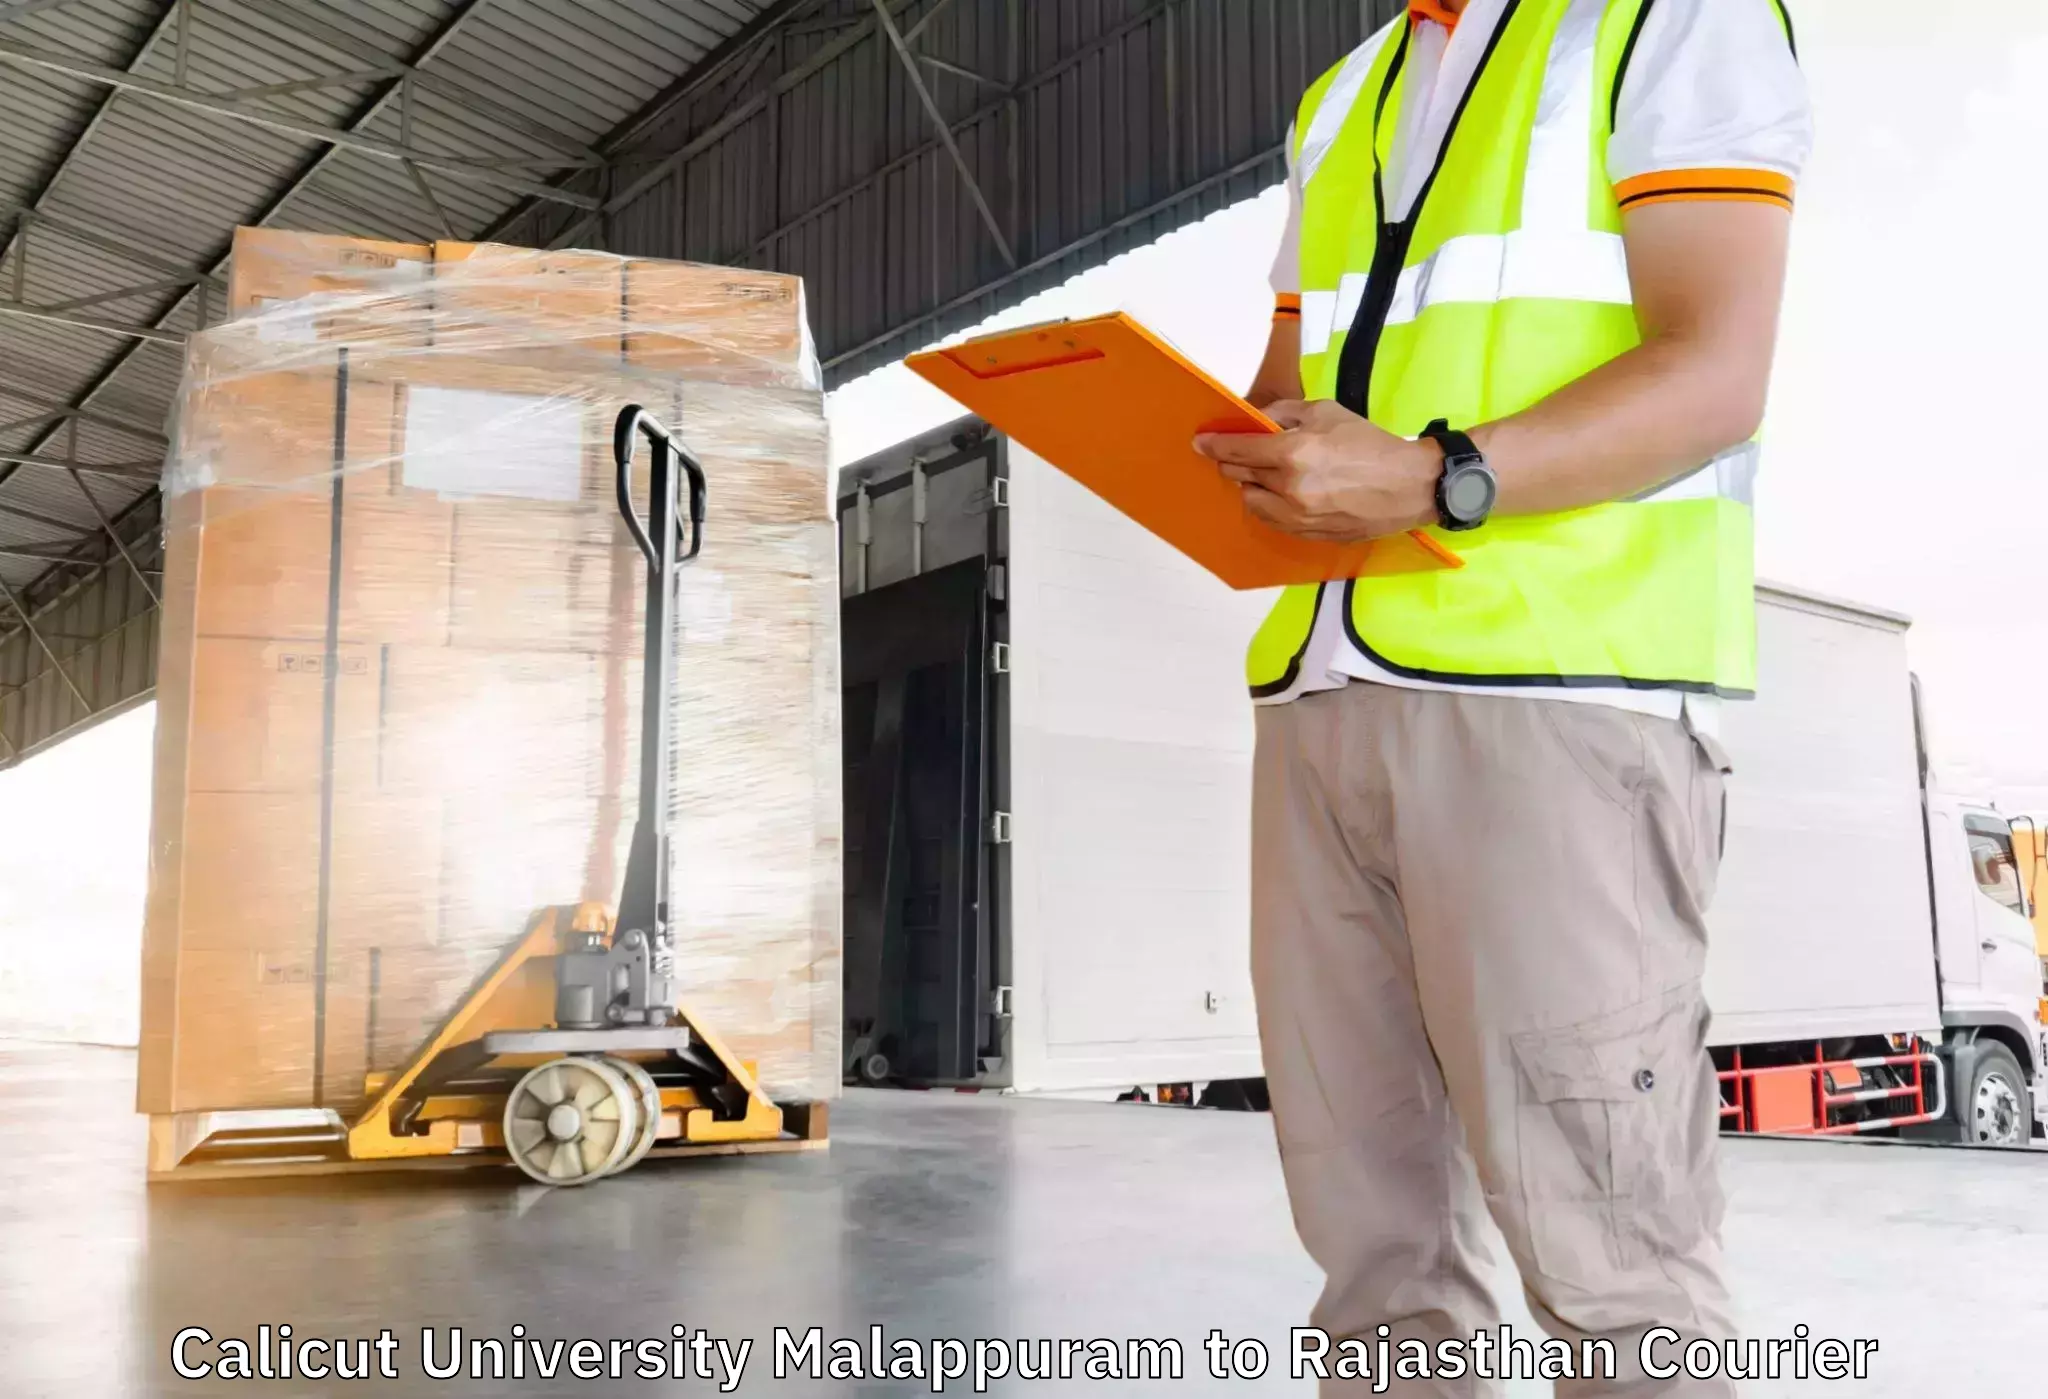 Furniture transport experts Calicut University Malappuram to Itawa